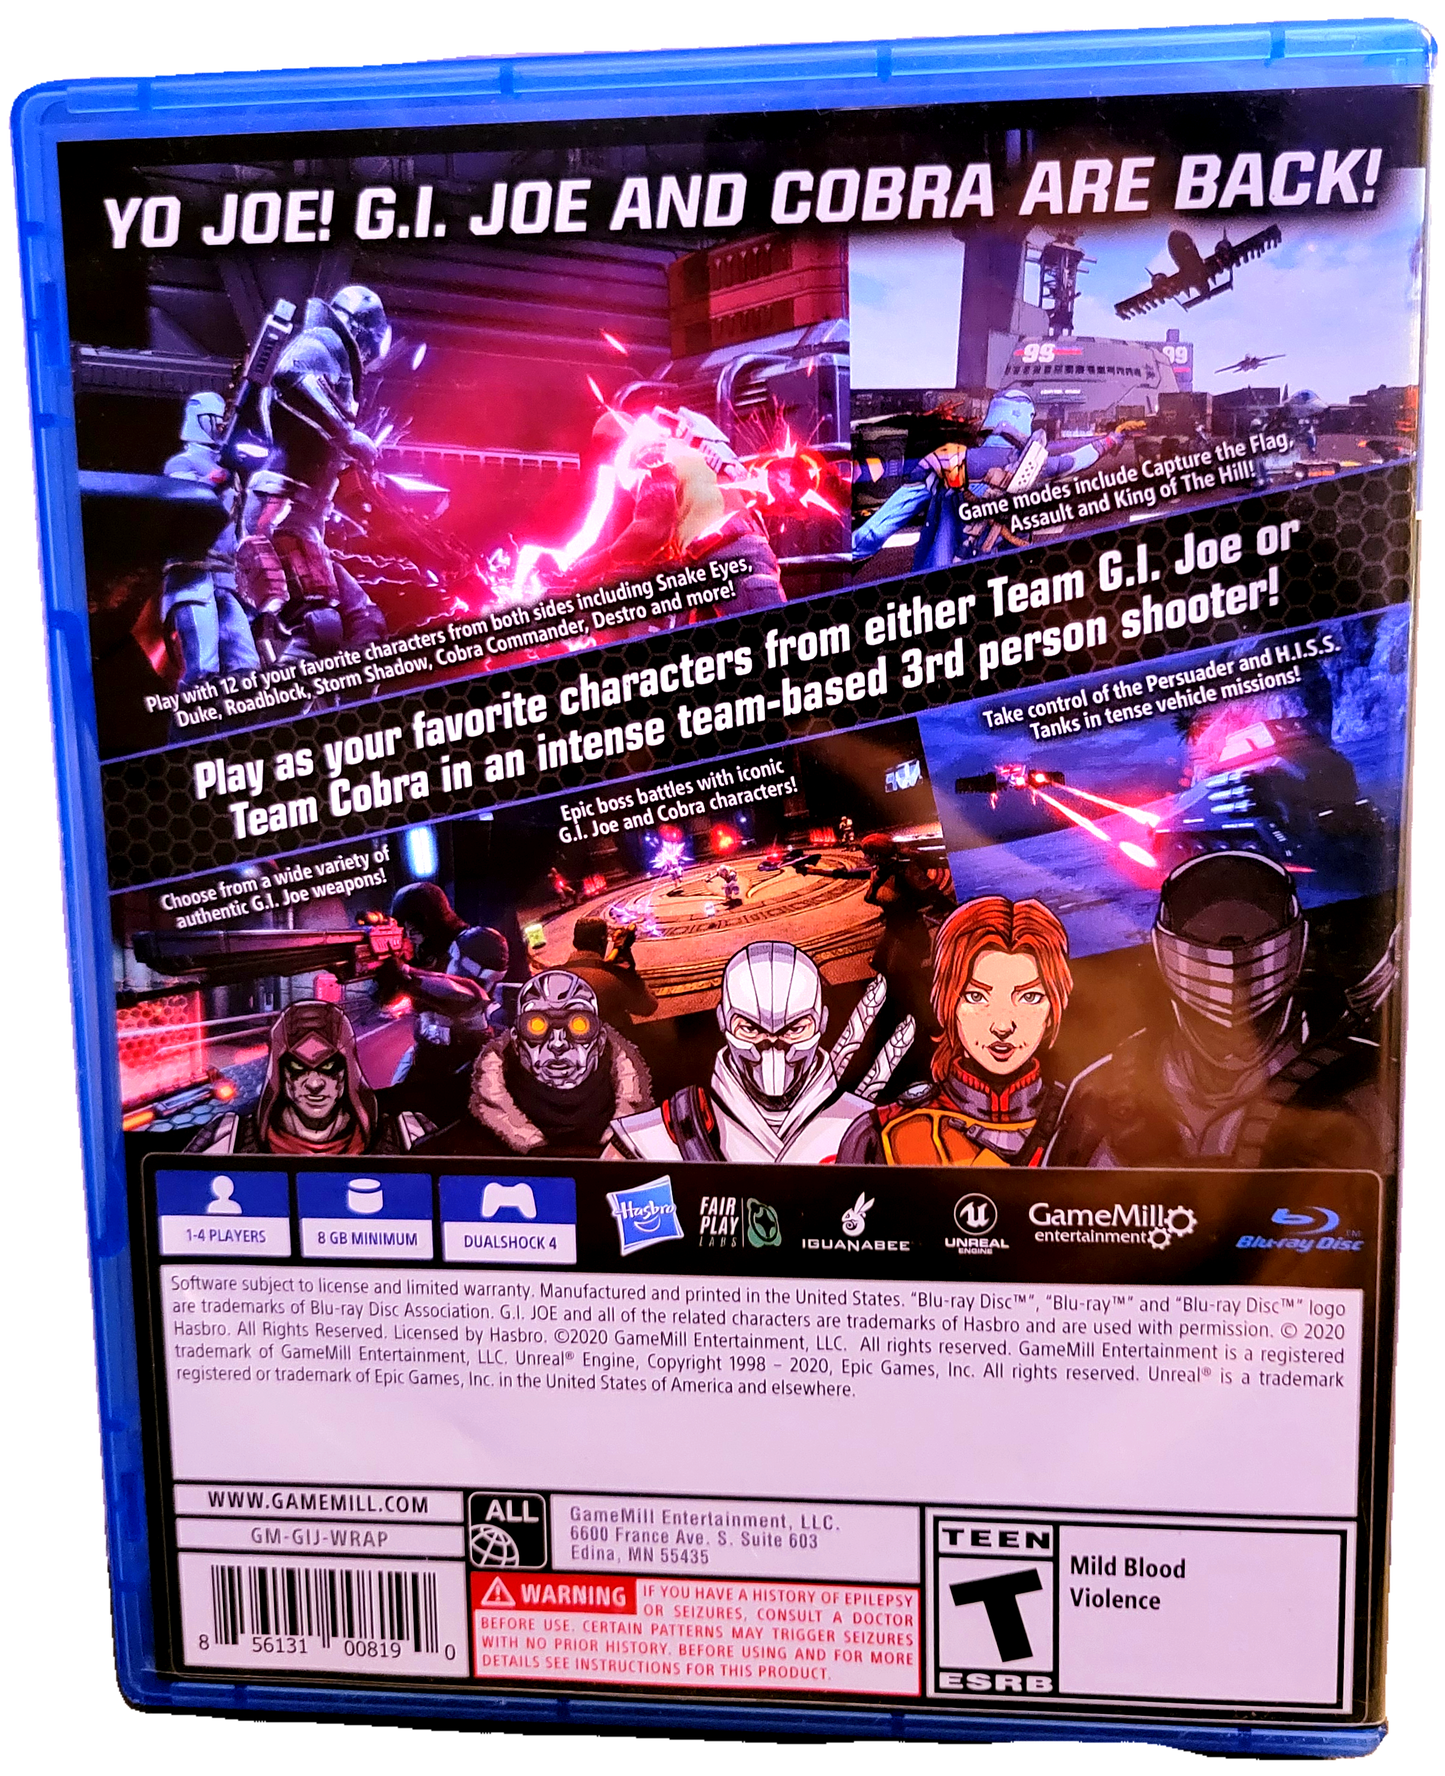 GI Joe Operation Blackout Playstation 4 (PS4) Used Video Game